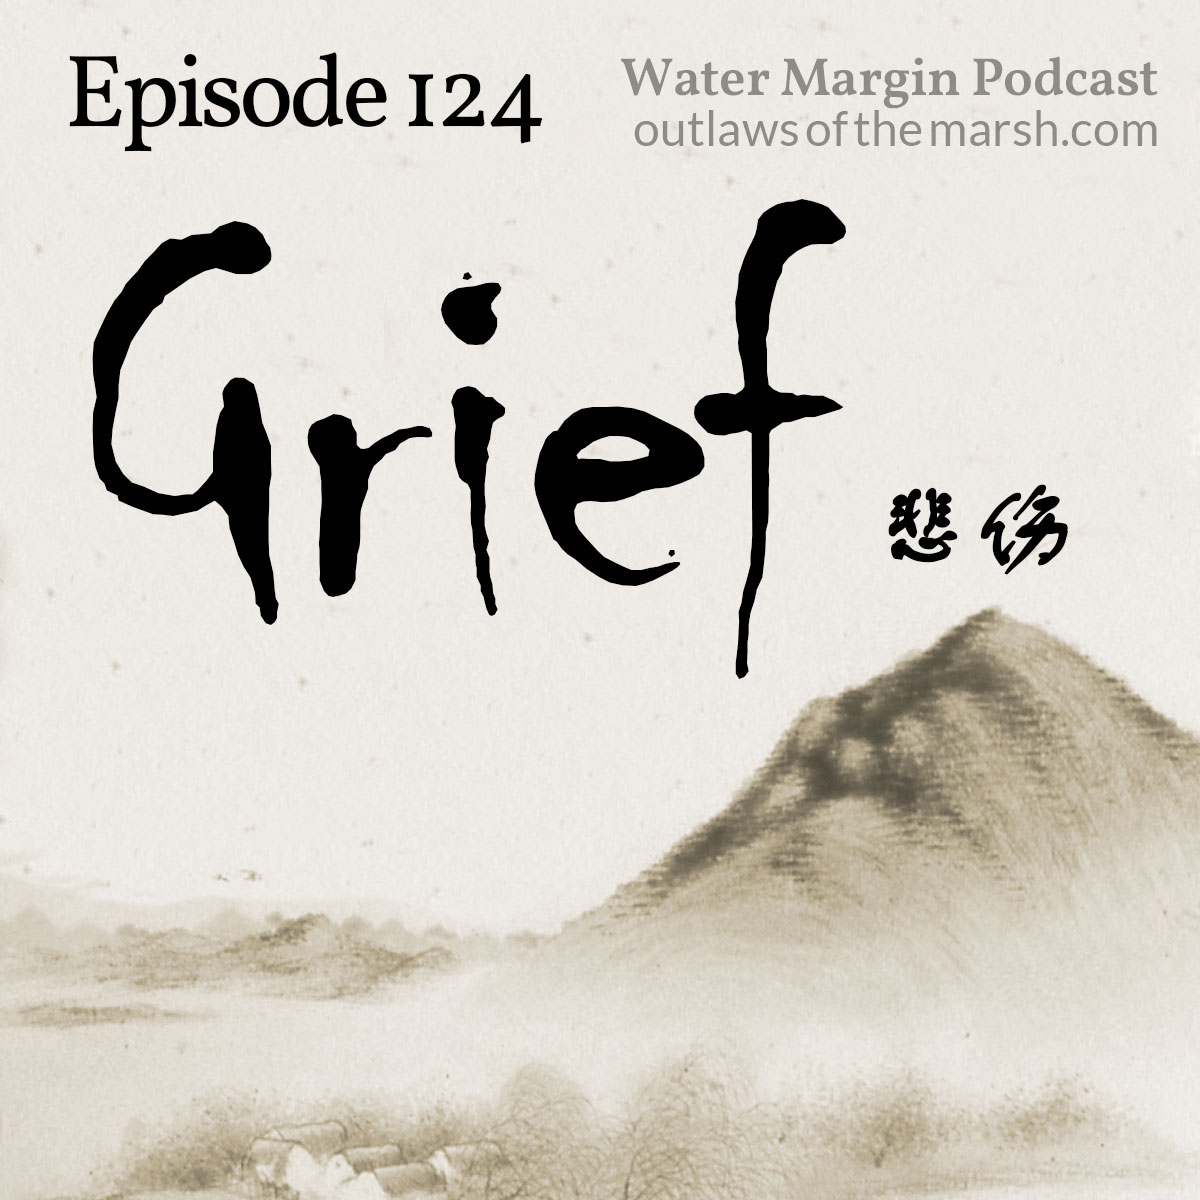 Water Margin Podcast: Episode 124